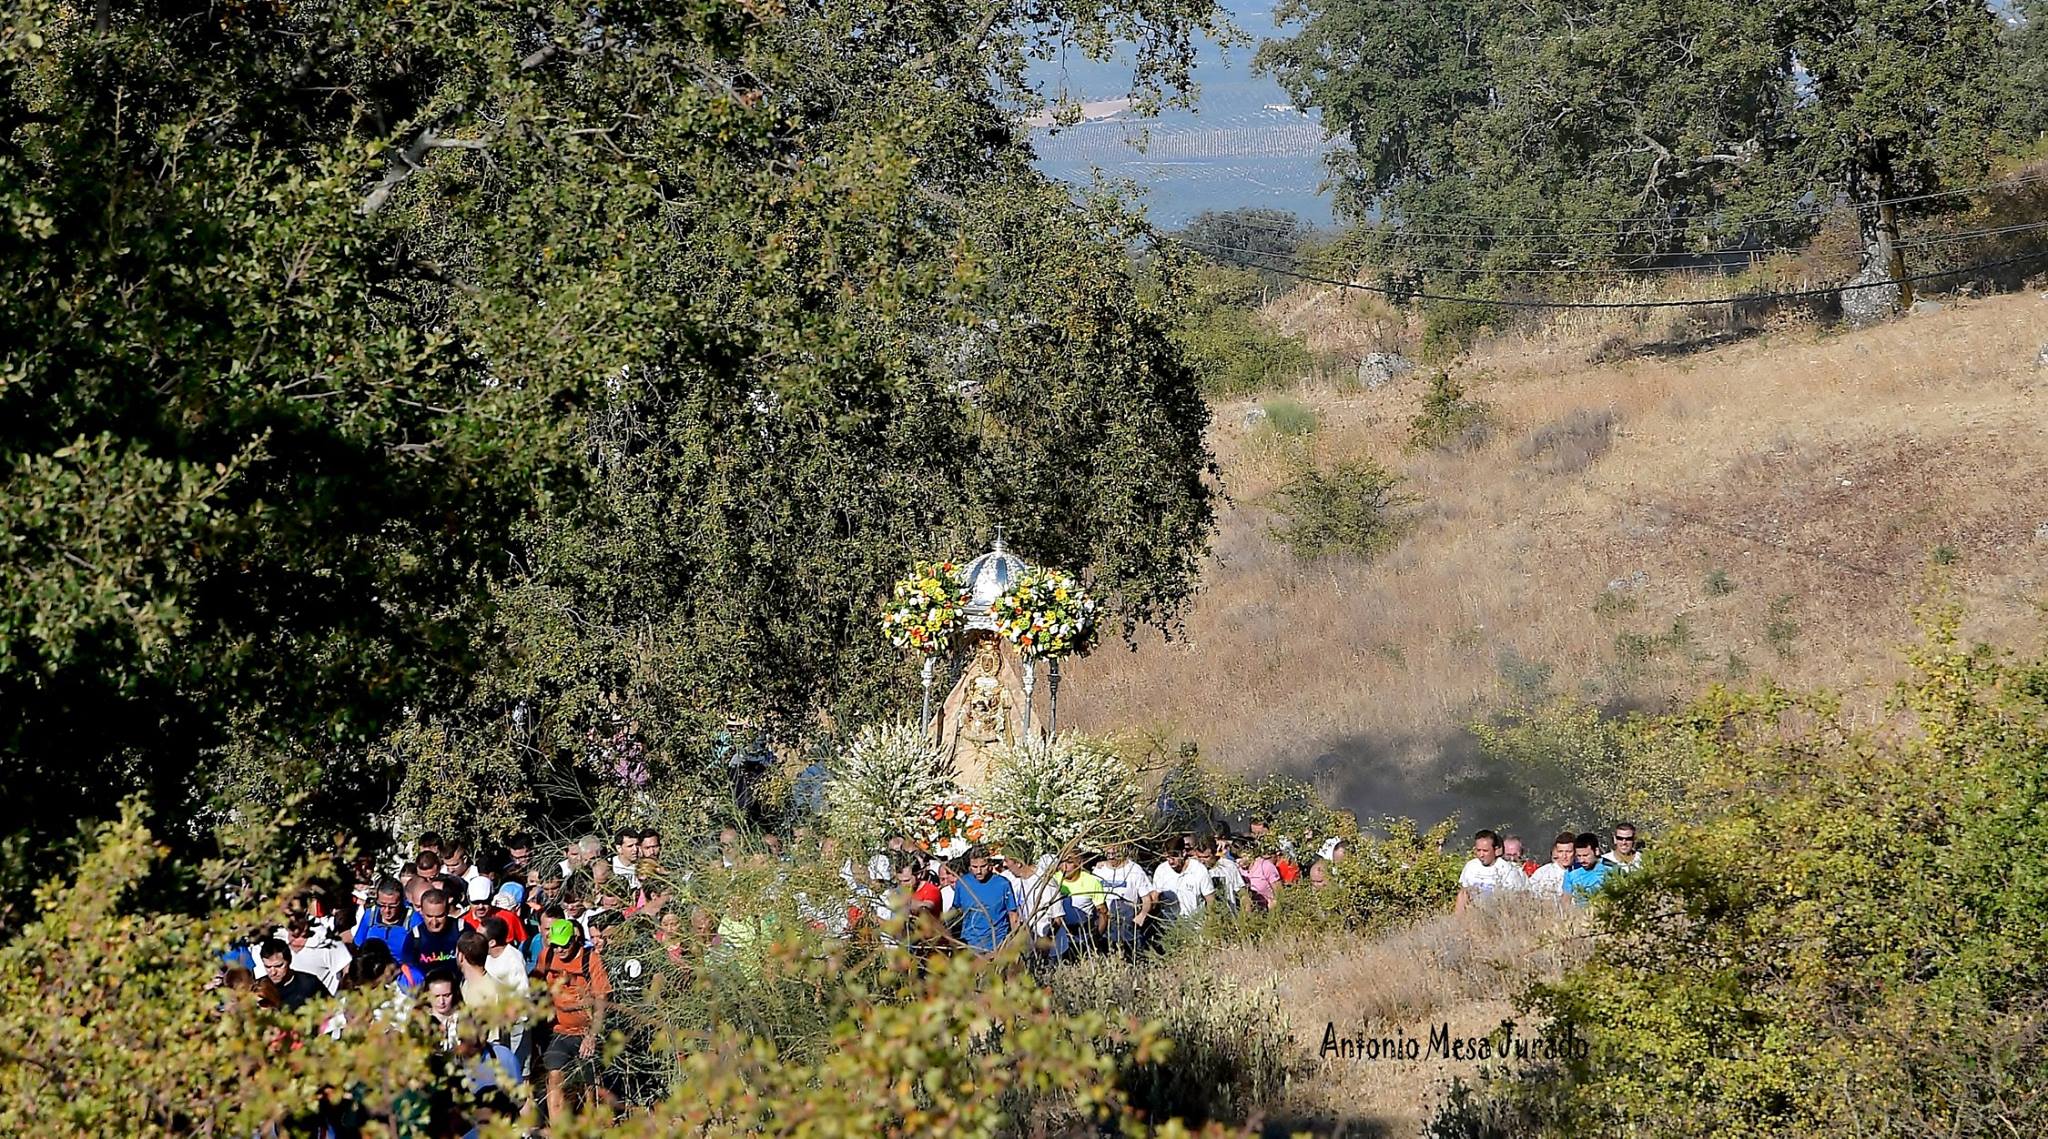 Fotos de la Subida de la Virgen de la Sierra 2017. Cabra de Córdoba